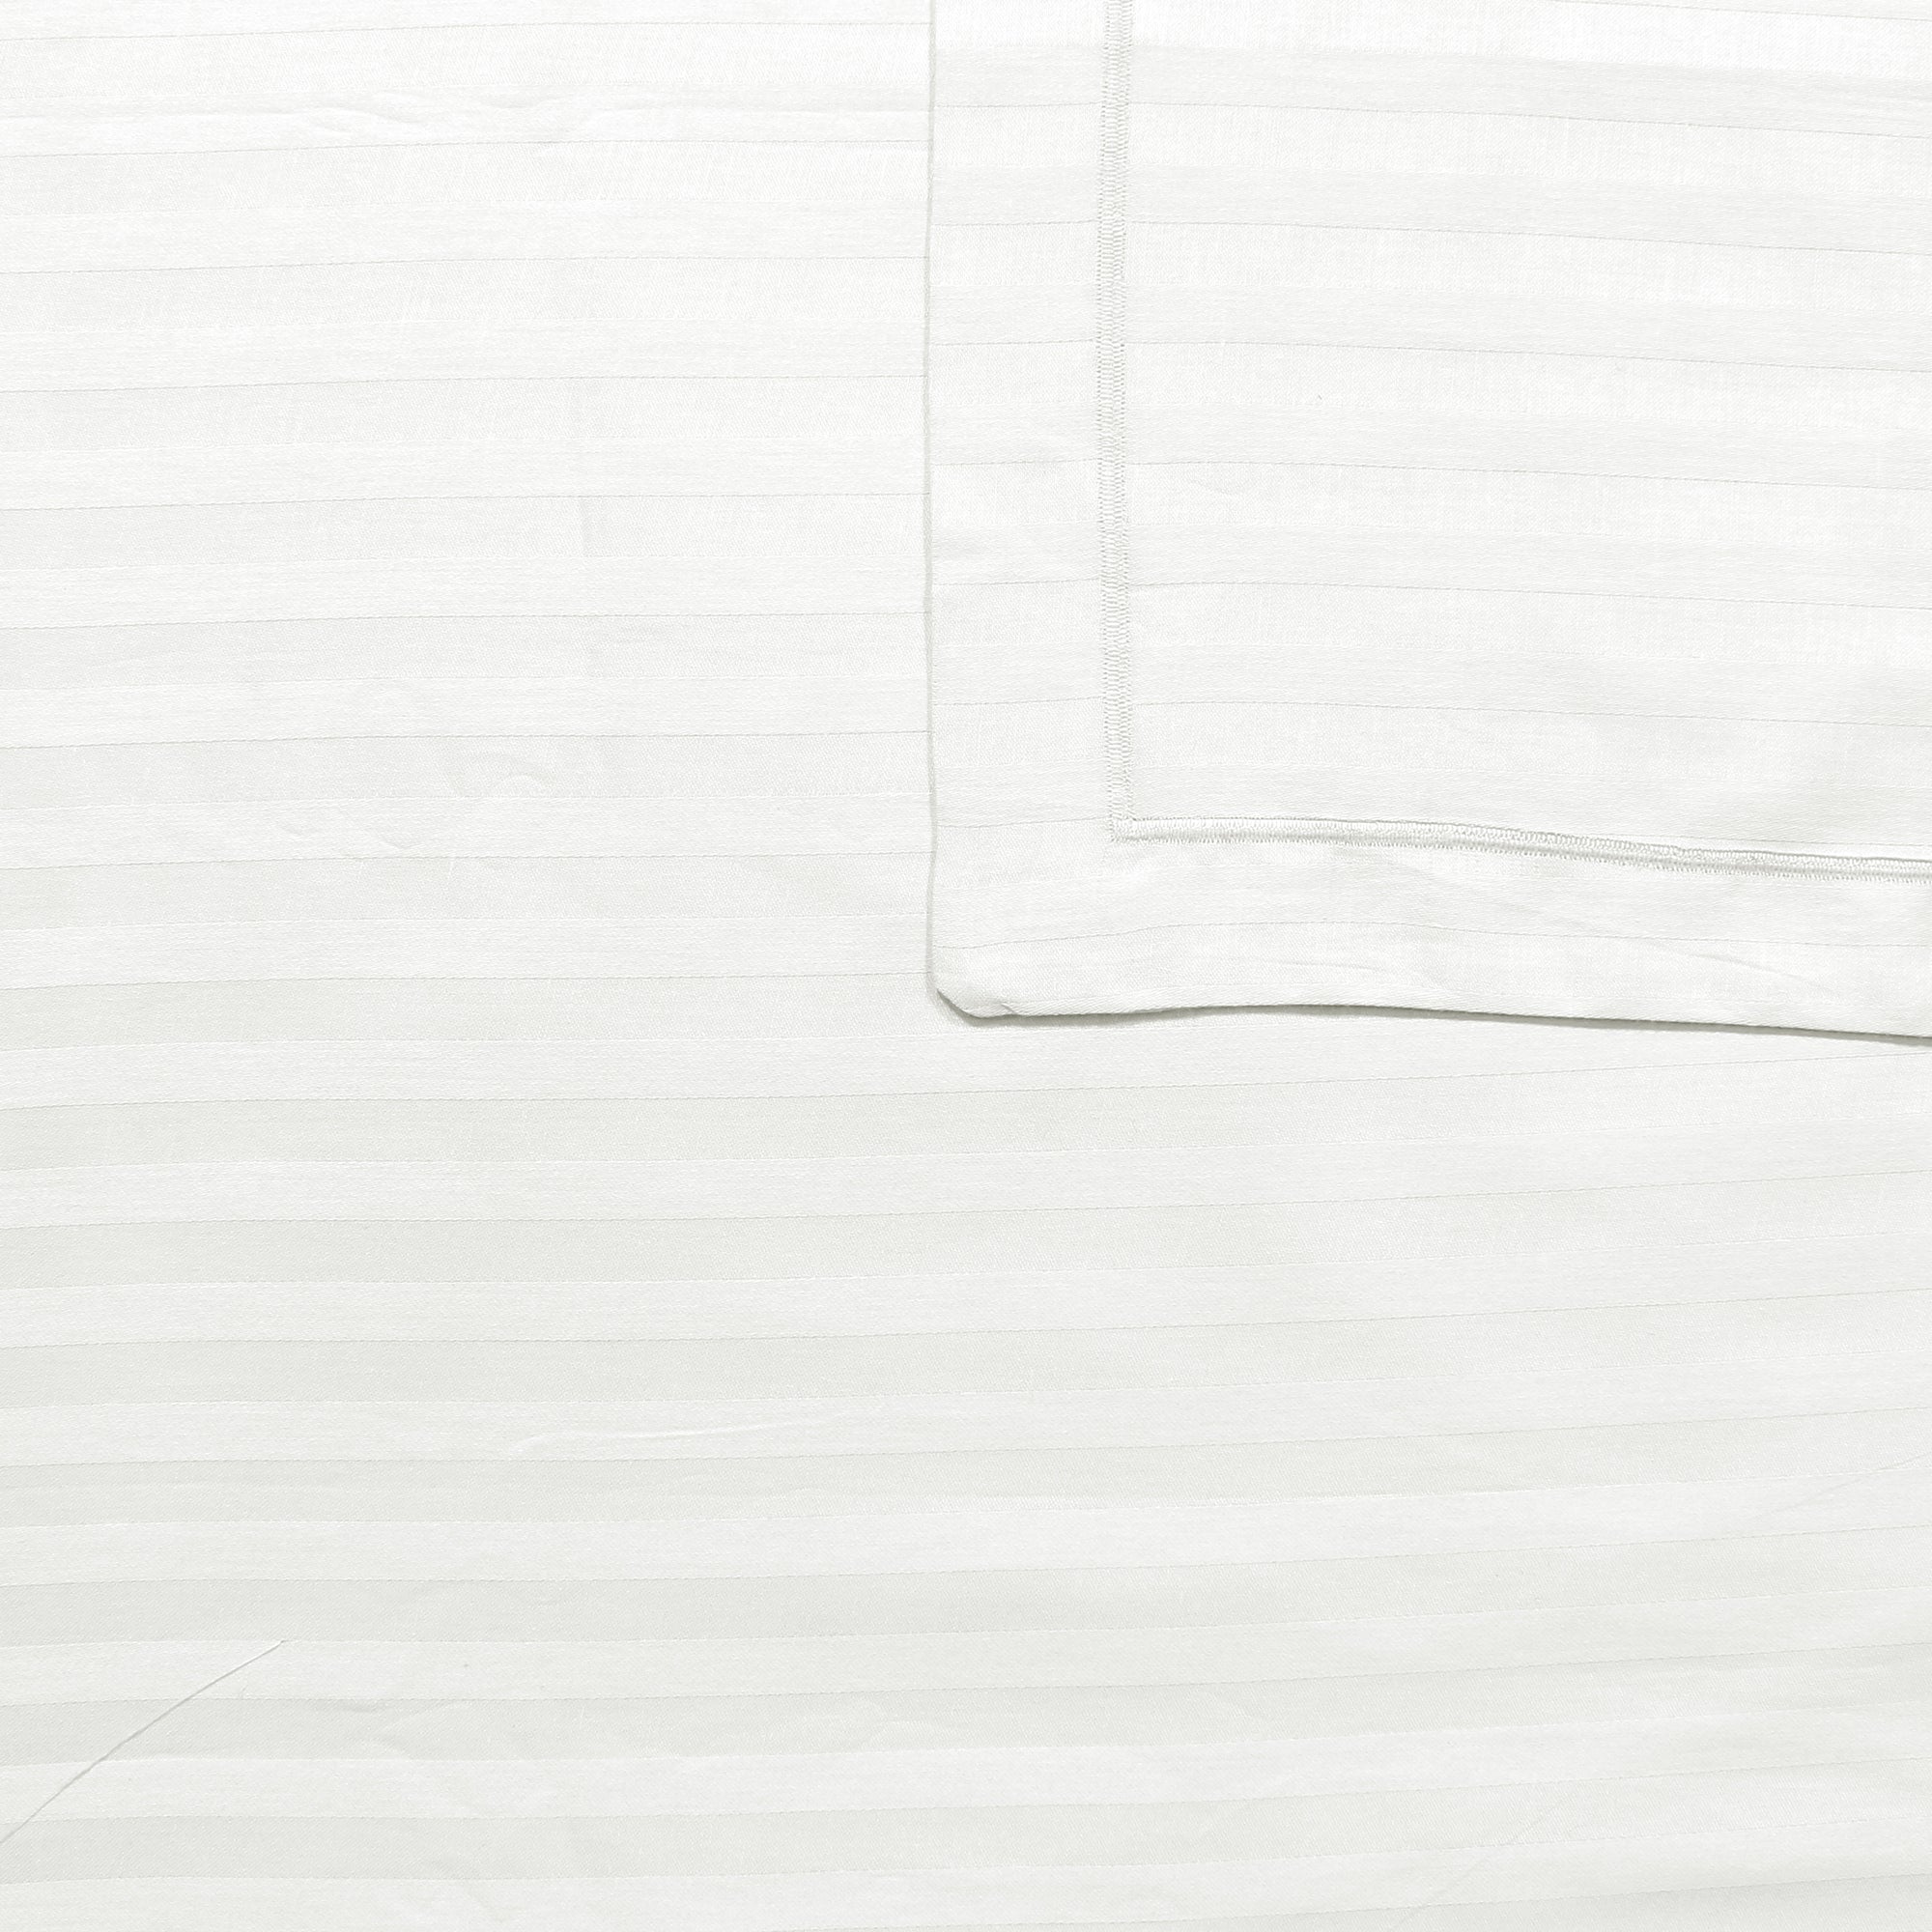 Avalon White 300 TC 100% Cotton Single Size Bedsheet